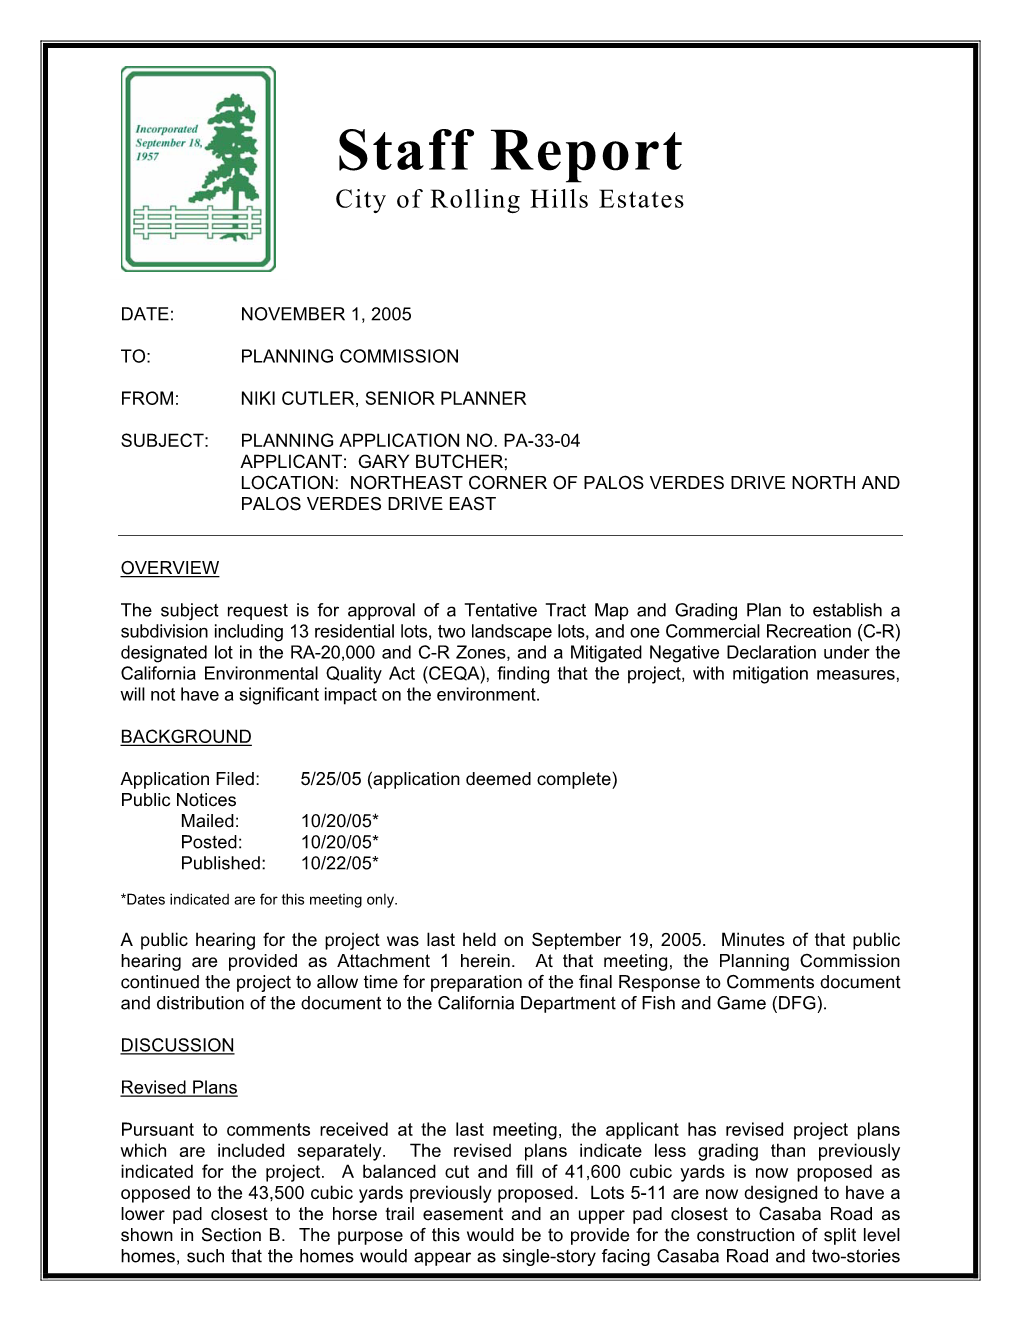 Staff Report City of Rolling Hills Estates